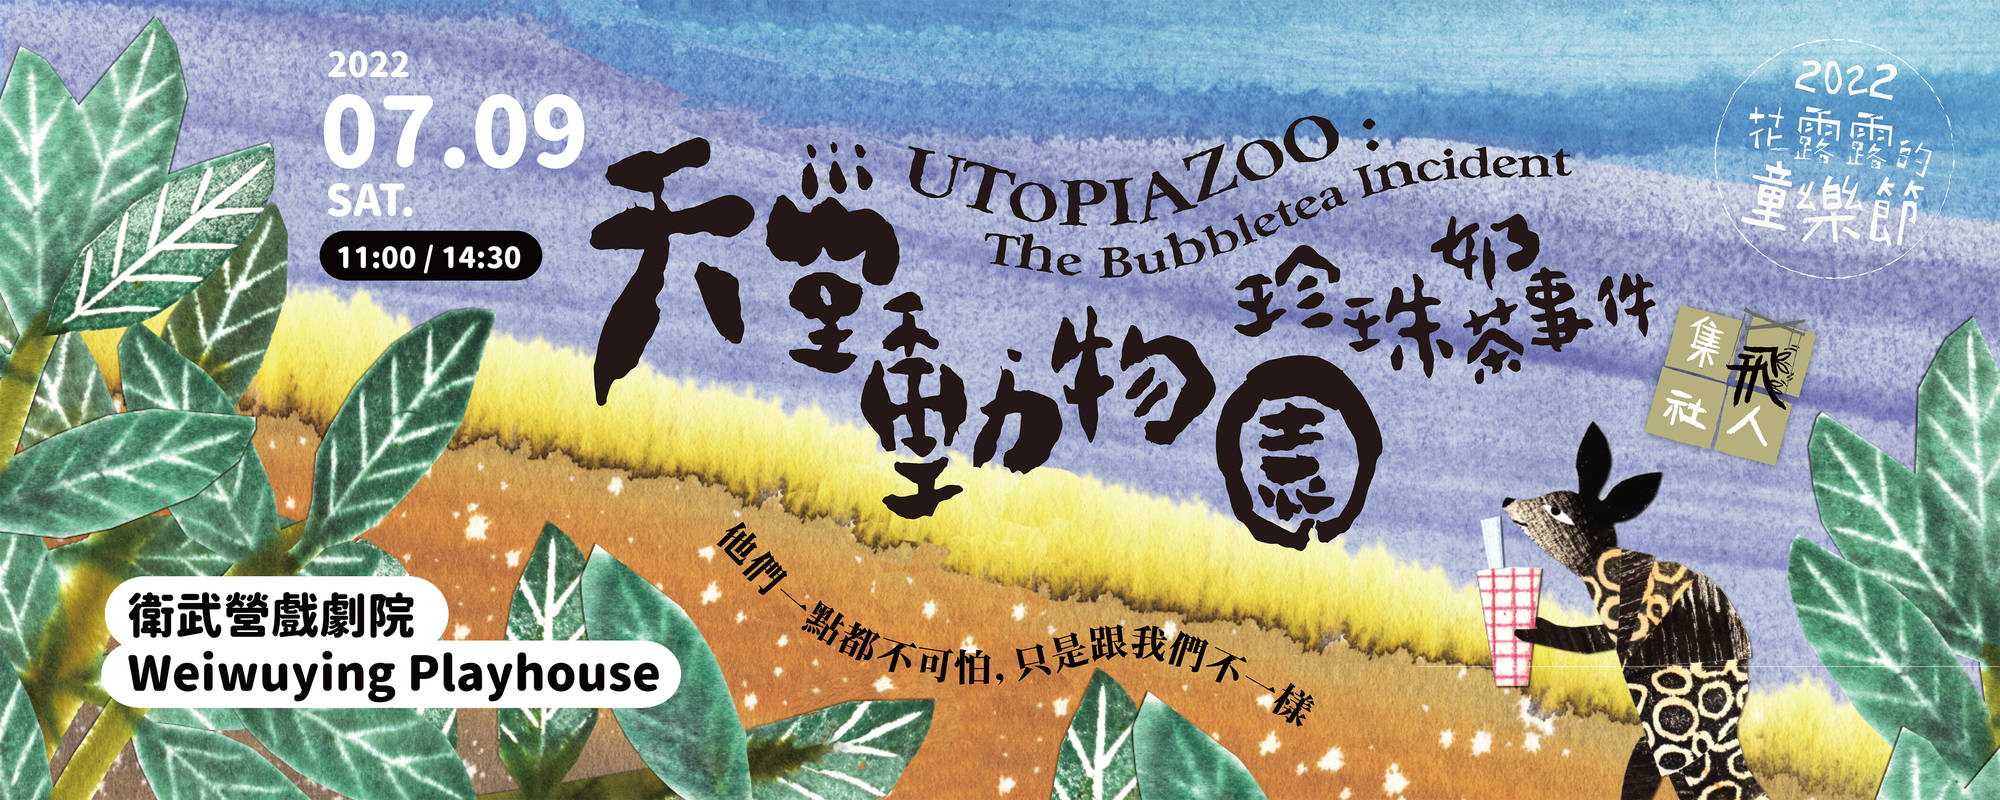 【2022 Weiwuying Children's Festival】Flying Group Theatre - UTOPIAZOO: The Bubbletea Incident